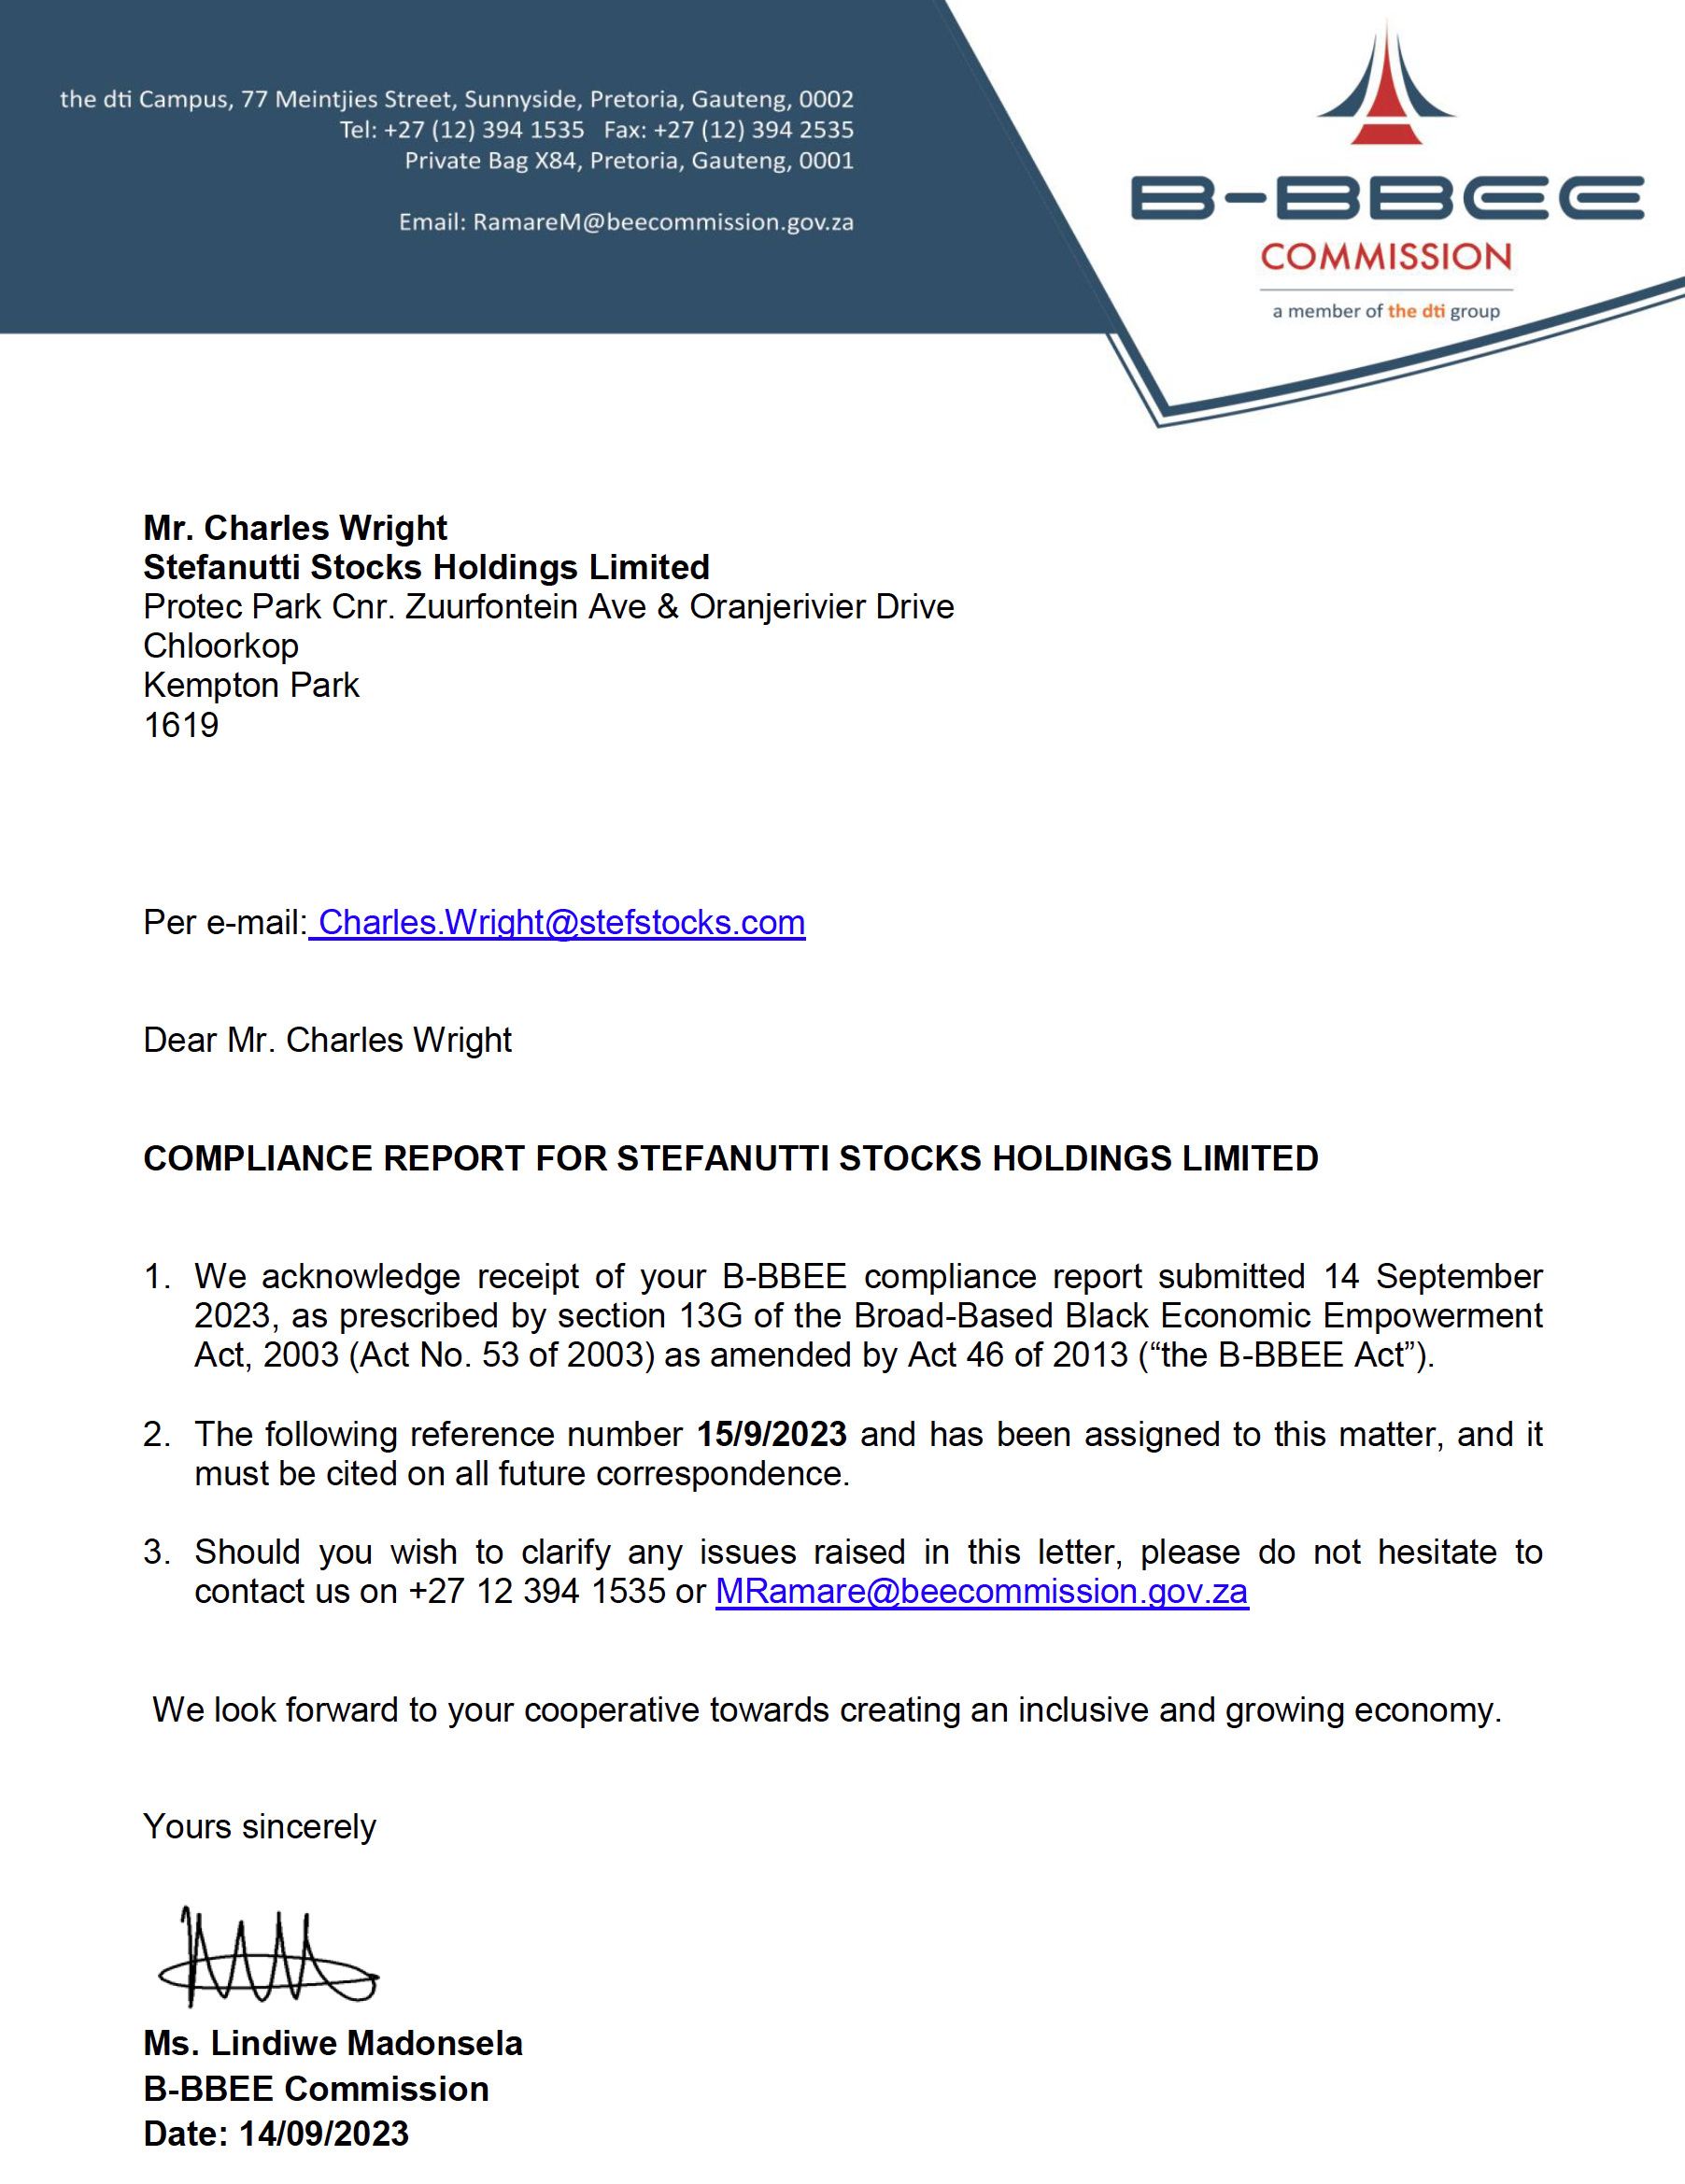 Acknowledgement letter - Stefanutti Stocks Holdings Limited